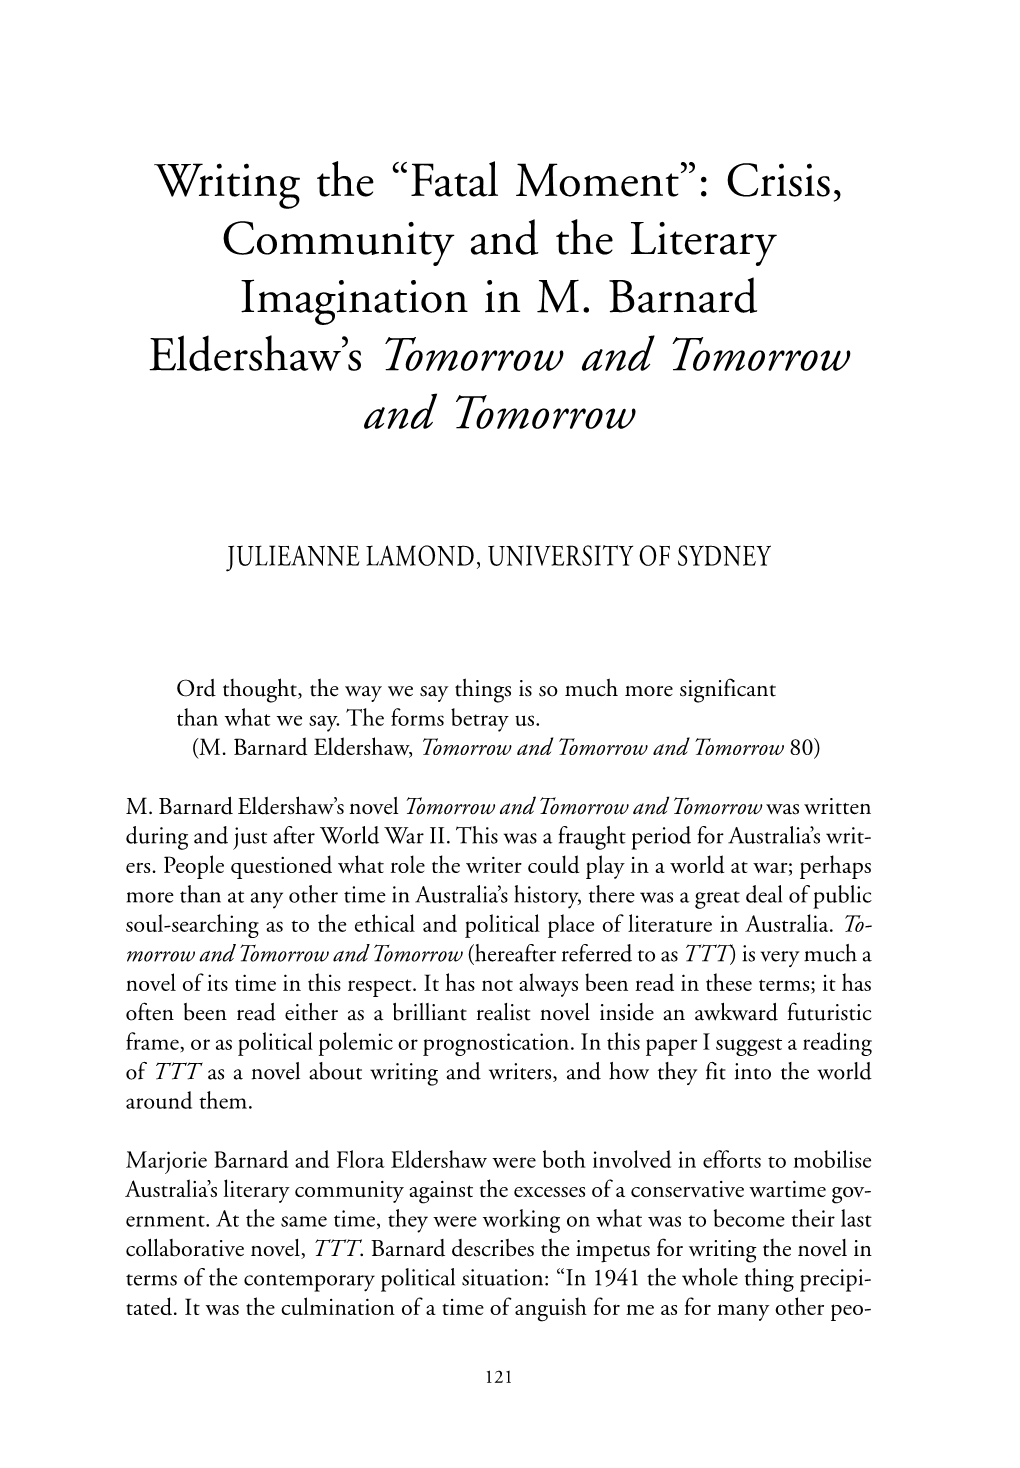 Crisis, Community and the Literary Imagination in M. Barnard Eldershaw's Tomorrow and Tomorrow